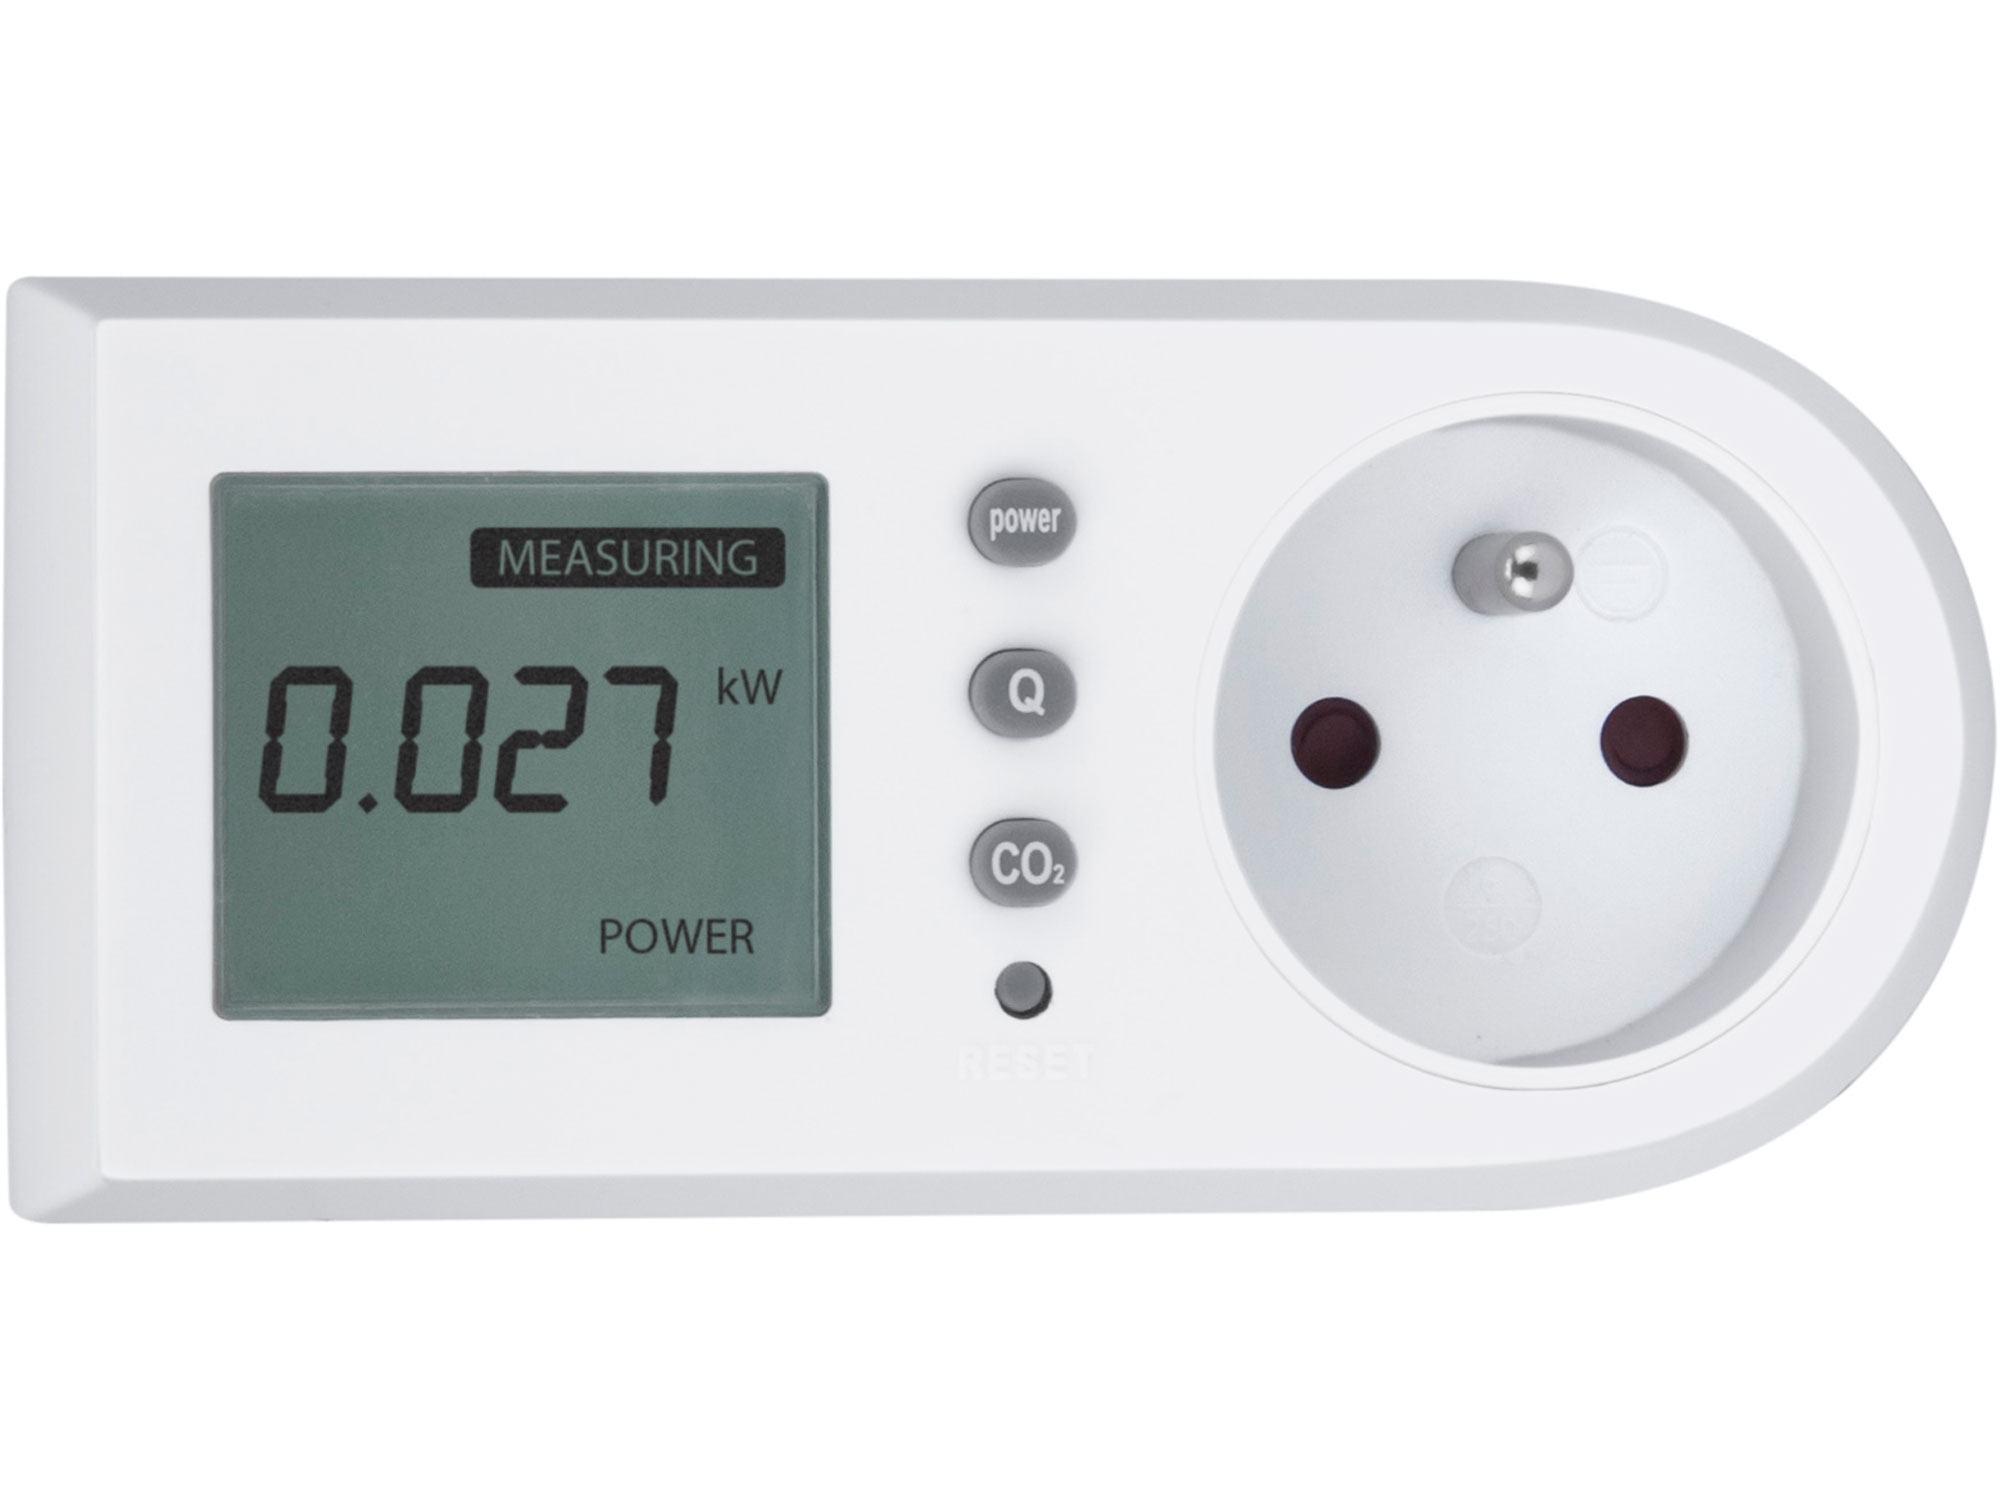 měřič spotřeby el. energie - wattmetr, kW, kWh, CO2